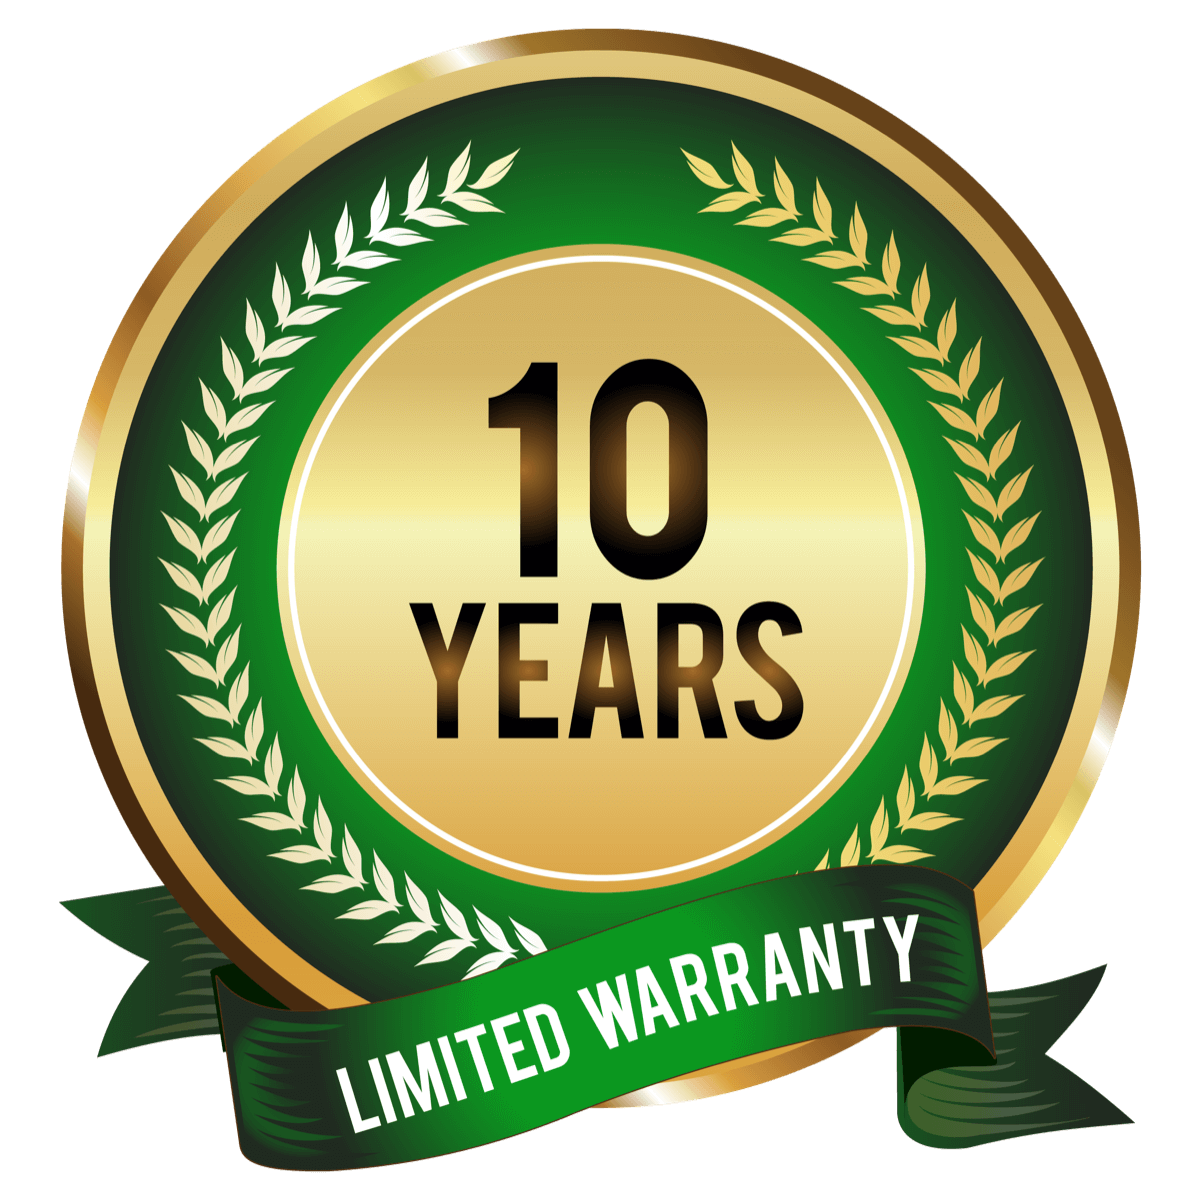 10 Years limited warranty